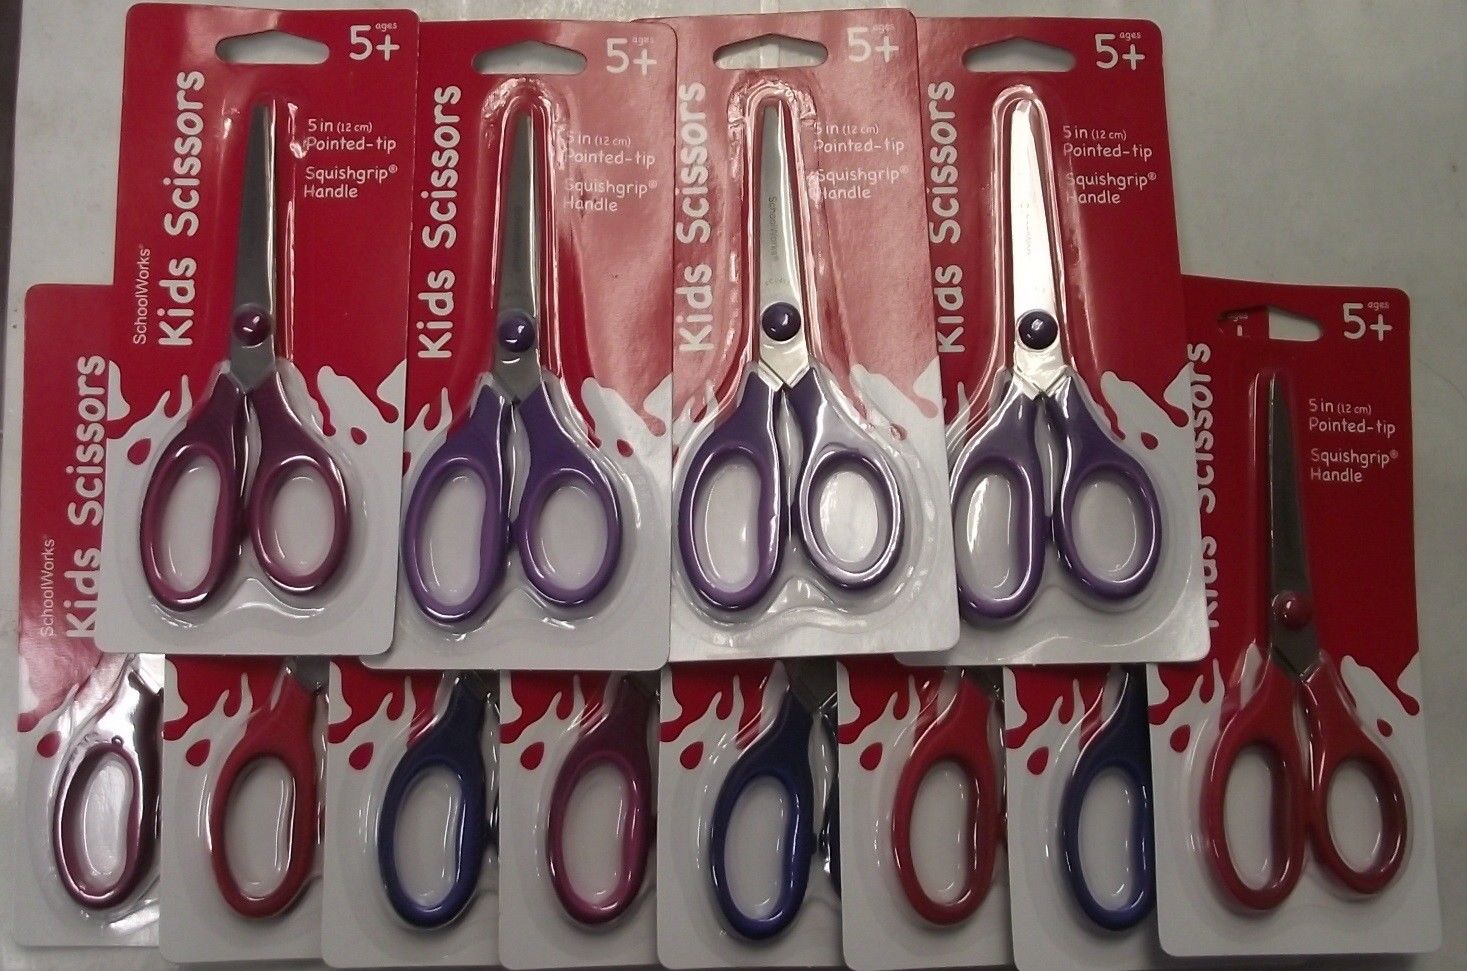 SchoolWorks 105580 Squishgrip Scissors 5" Pointed Tip 12pcs. Asst Colors